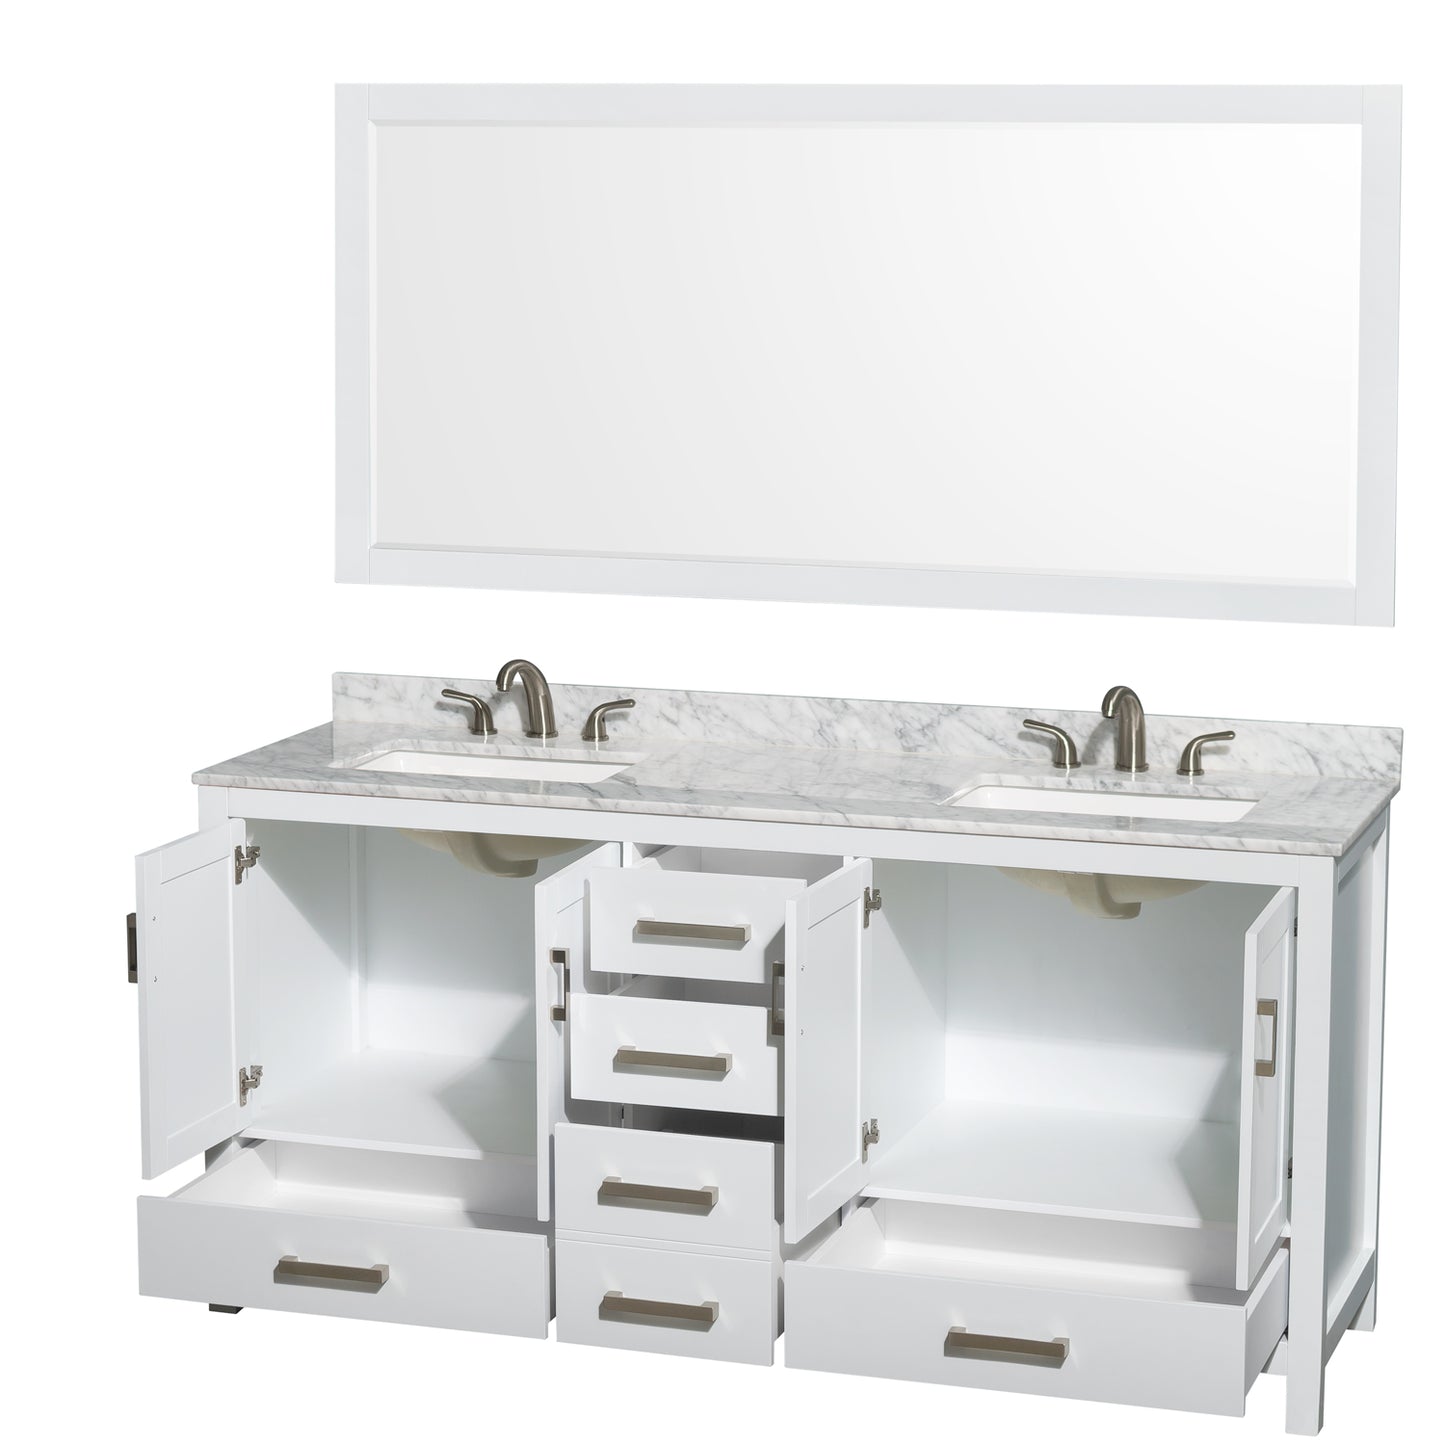 72 Inch Double Bathroom Vanity in White, White Carrara Marble Countertop, Undermount 3-Hole Square Sinks, 70 Inch Mirror - Luxe Bathroom Vanities Luxury Bathroom Fixtures Bathroom Furniture